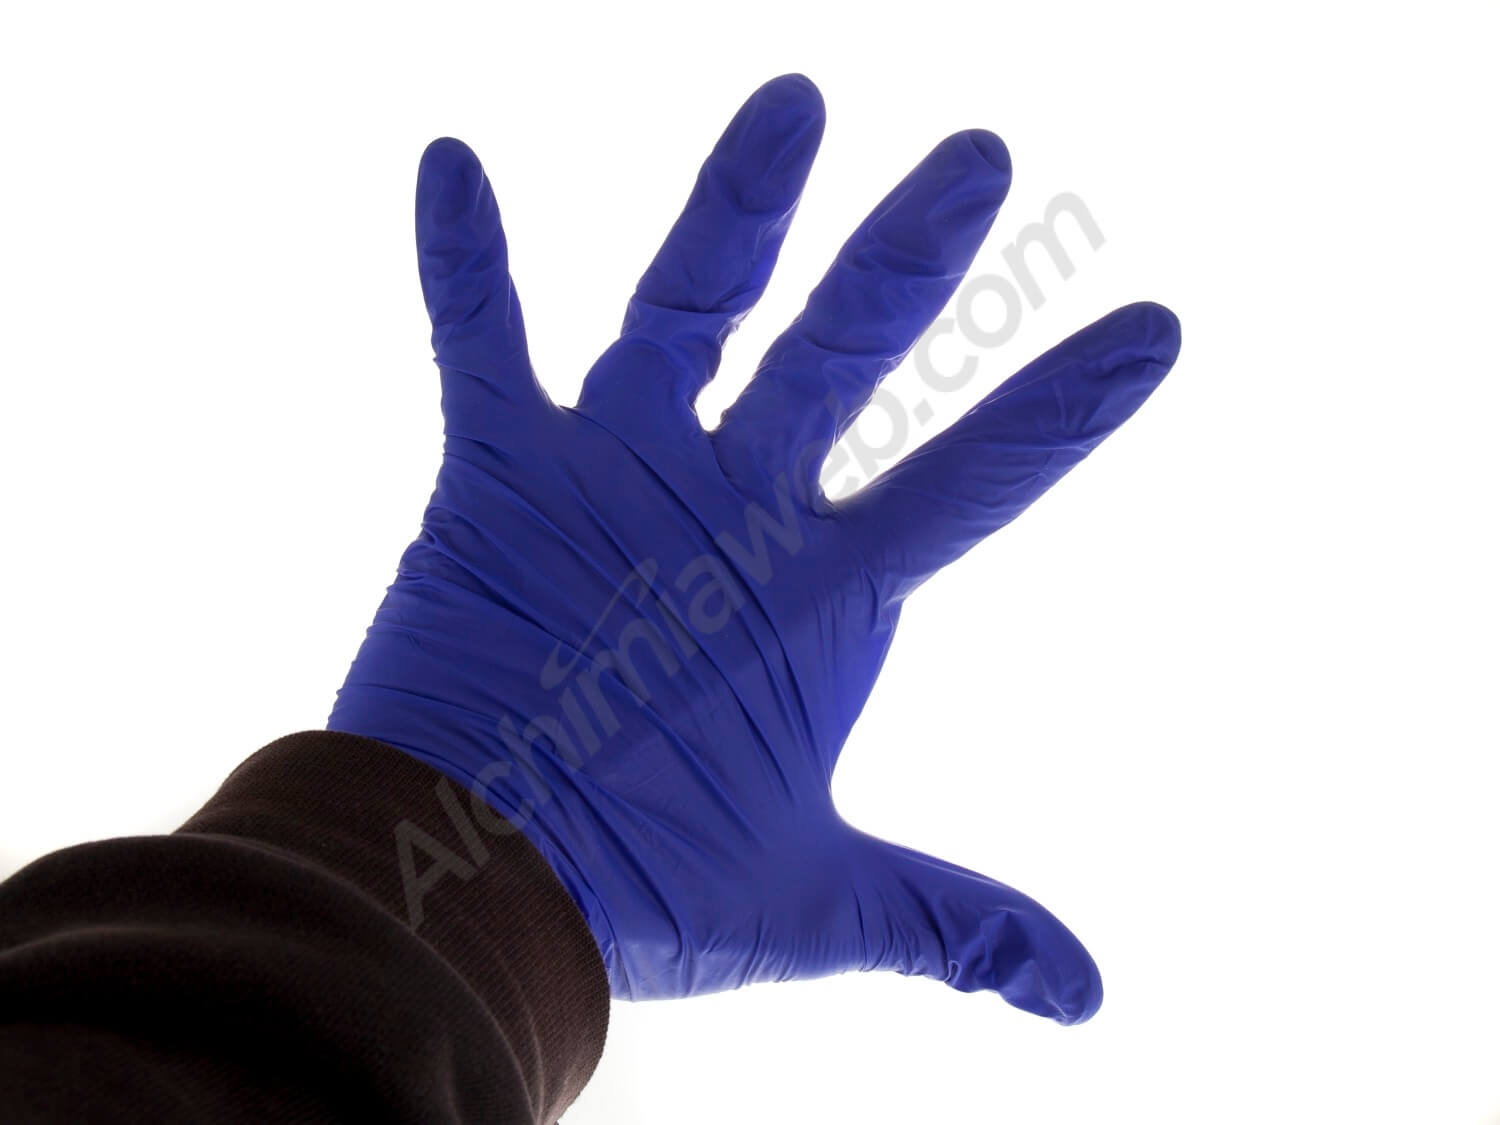 Pair of Nitrile gloves